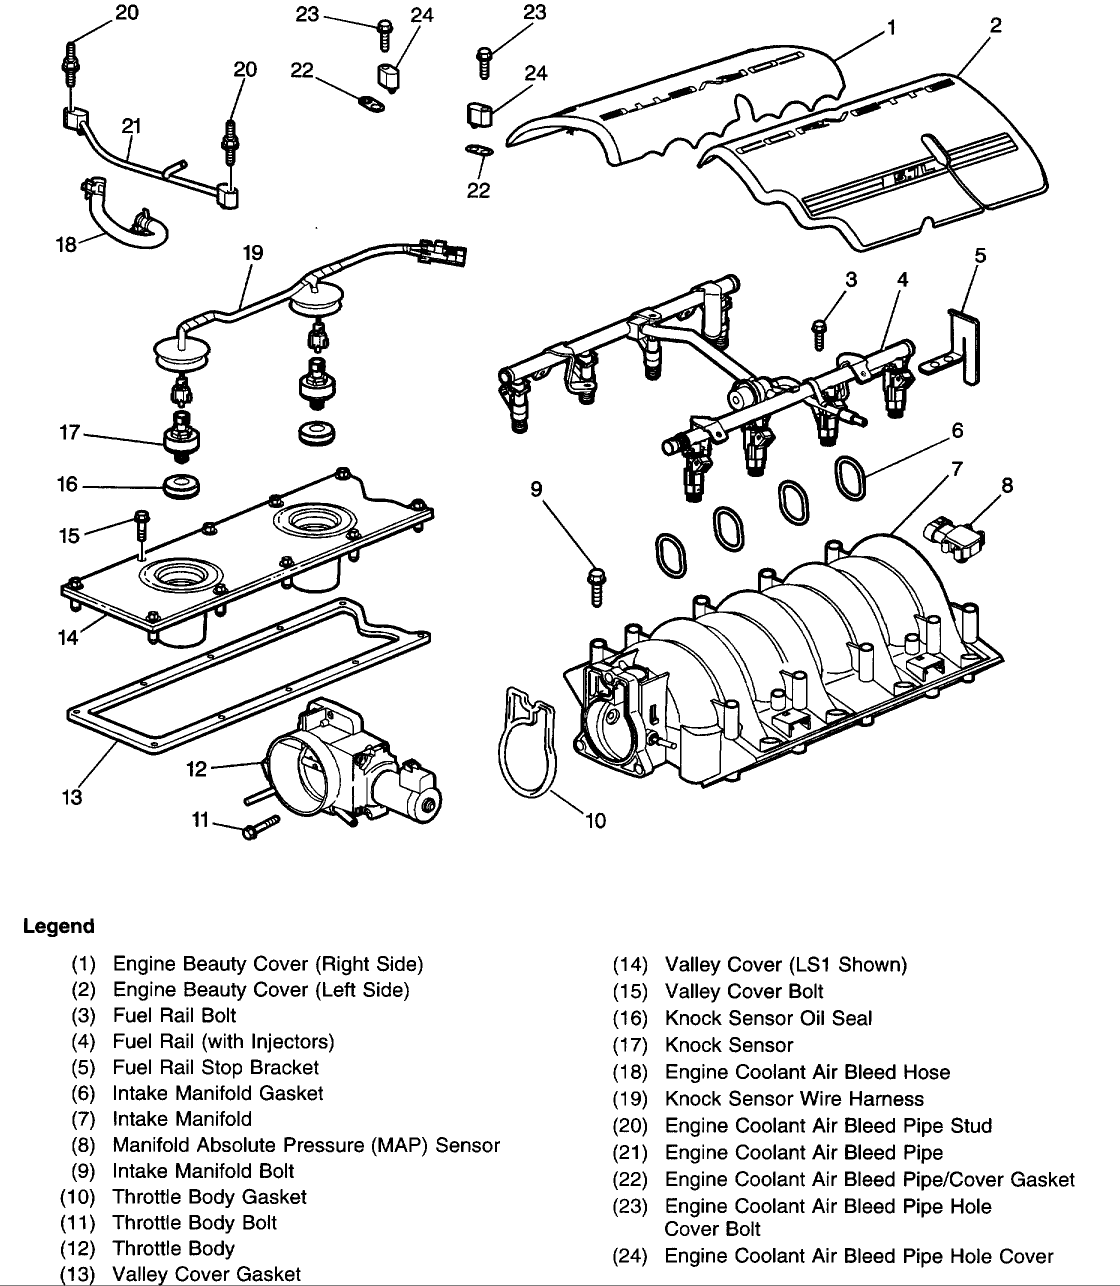 1994 Cadillac Lt1 Wiring Harness Diagram from www.ls1tech.com